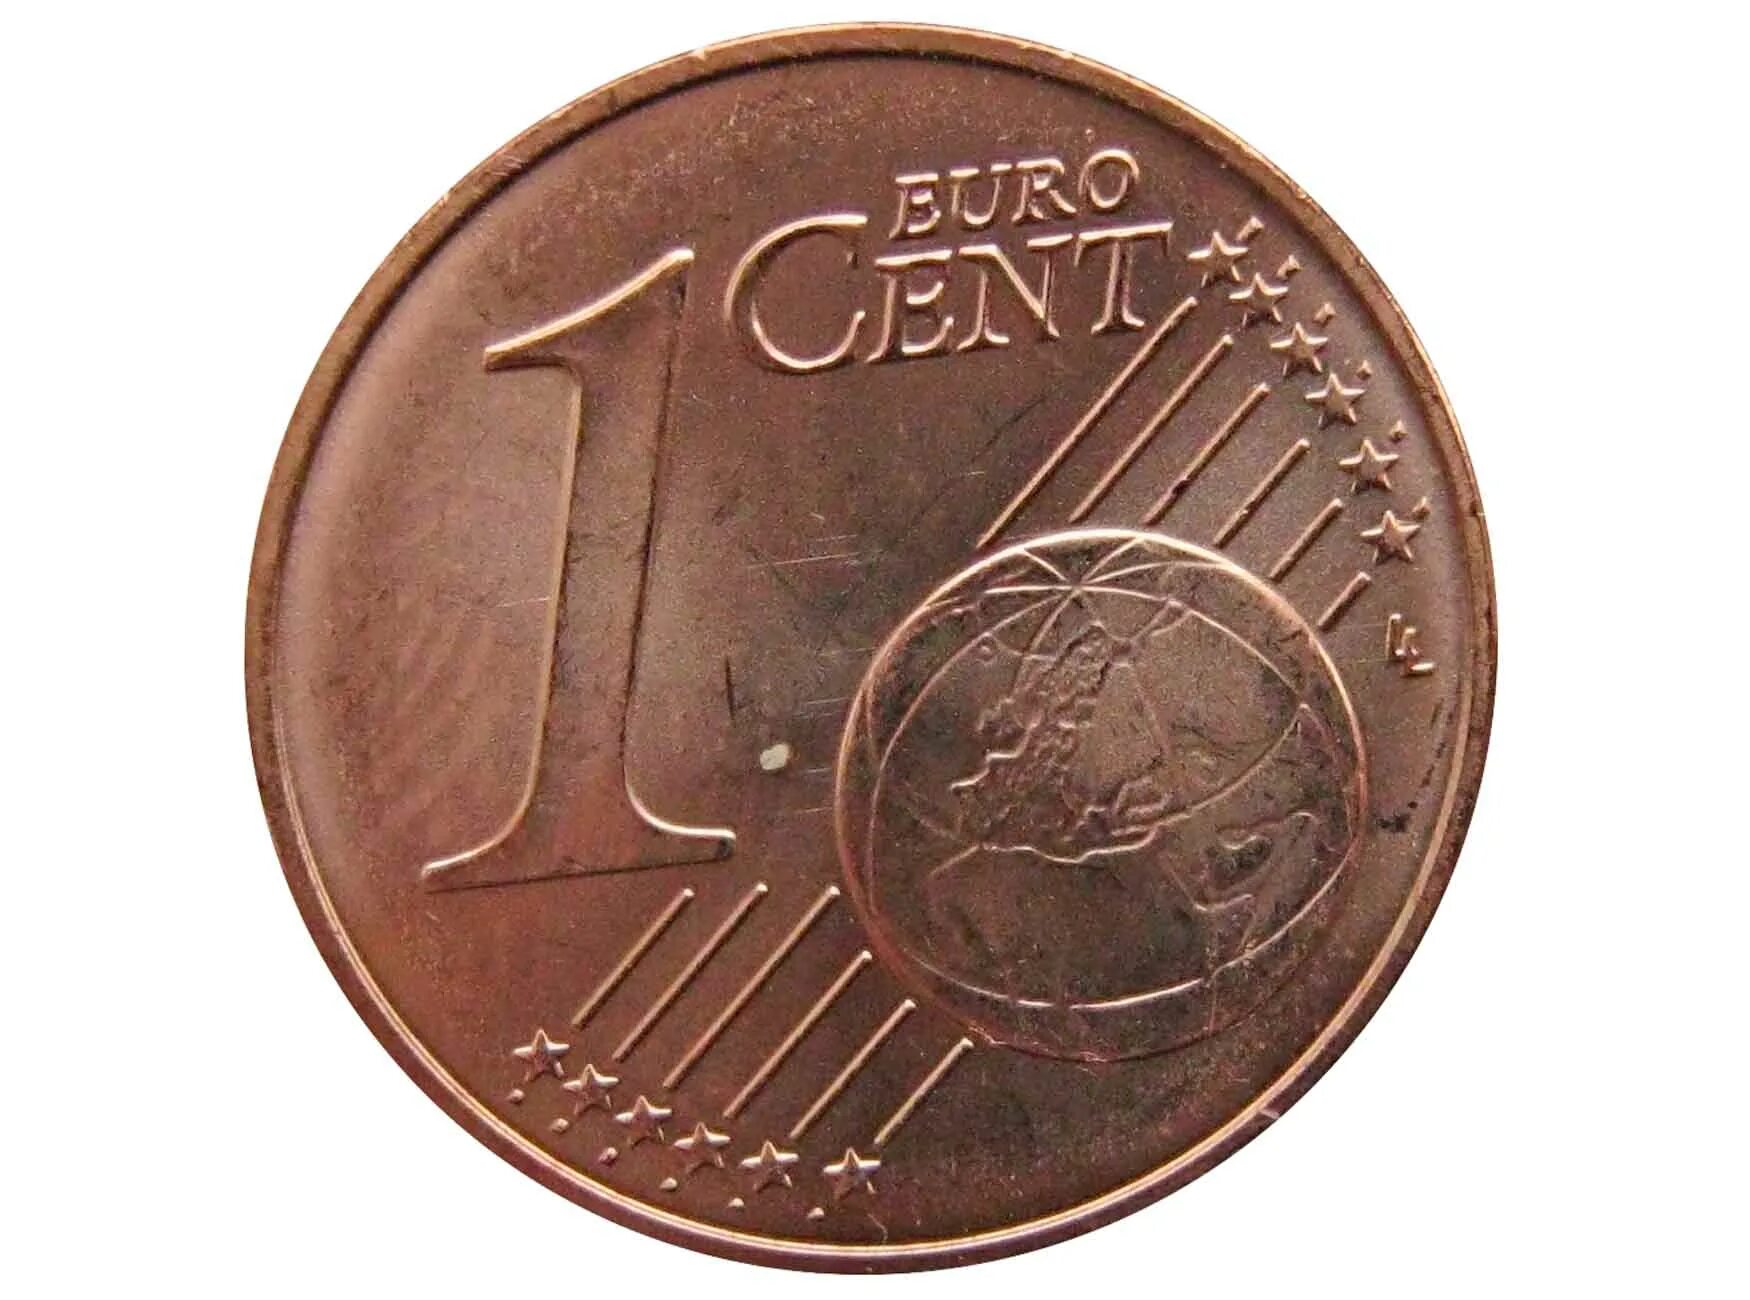 20 евроцентов в рублях. 10 Евро цент 2000. 20 Евроцентов 2000 года. 1 Евроцент Австрия. 1 Euro Cent монета.